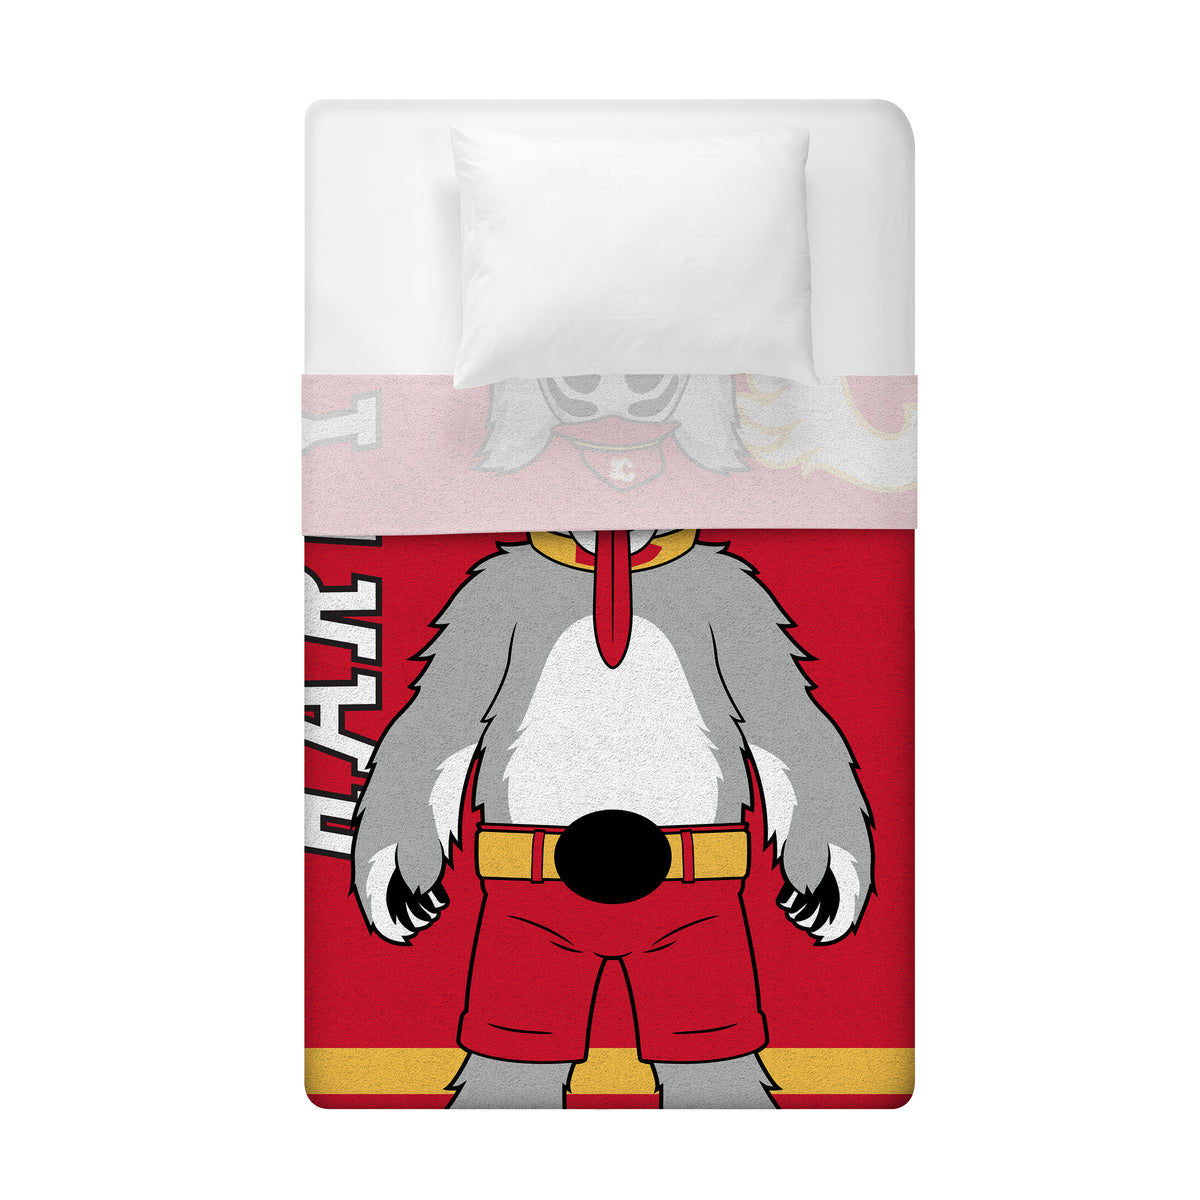 Calgary Flames Harvey the Hound Mascot 60” x 80” Plush Blanket